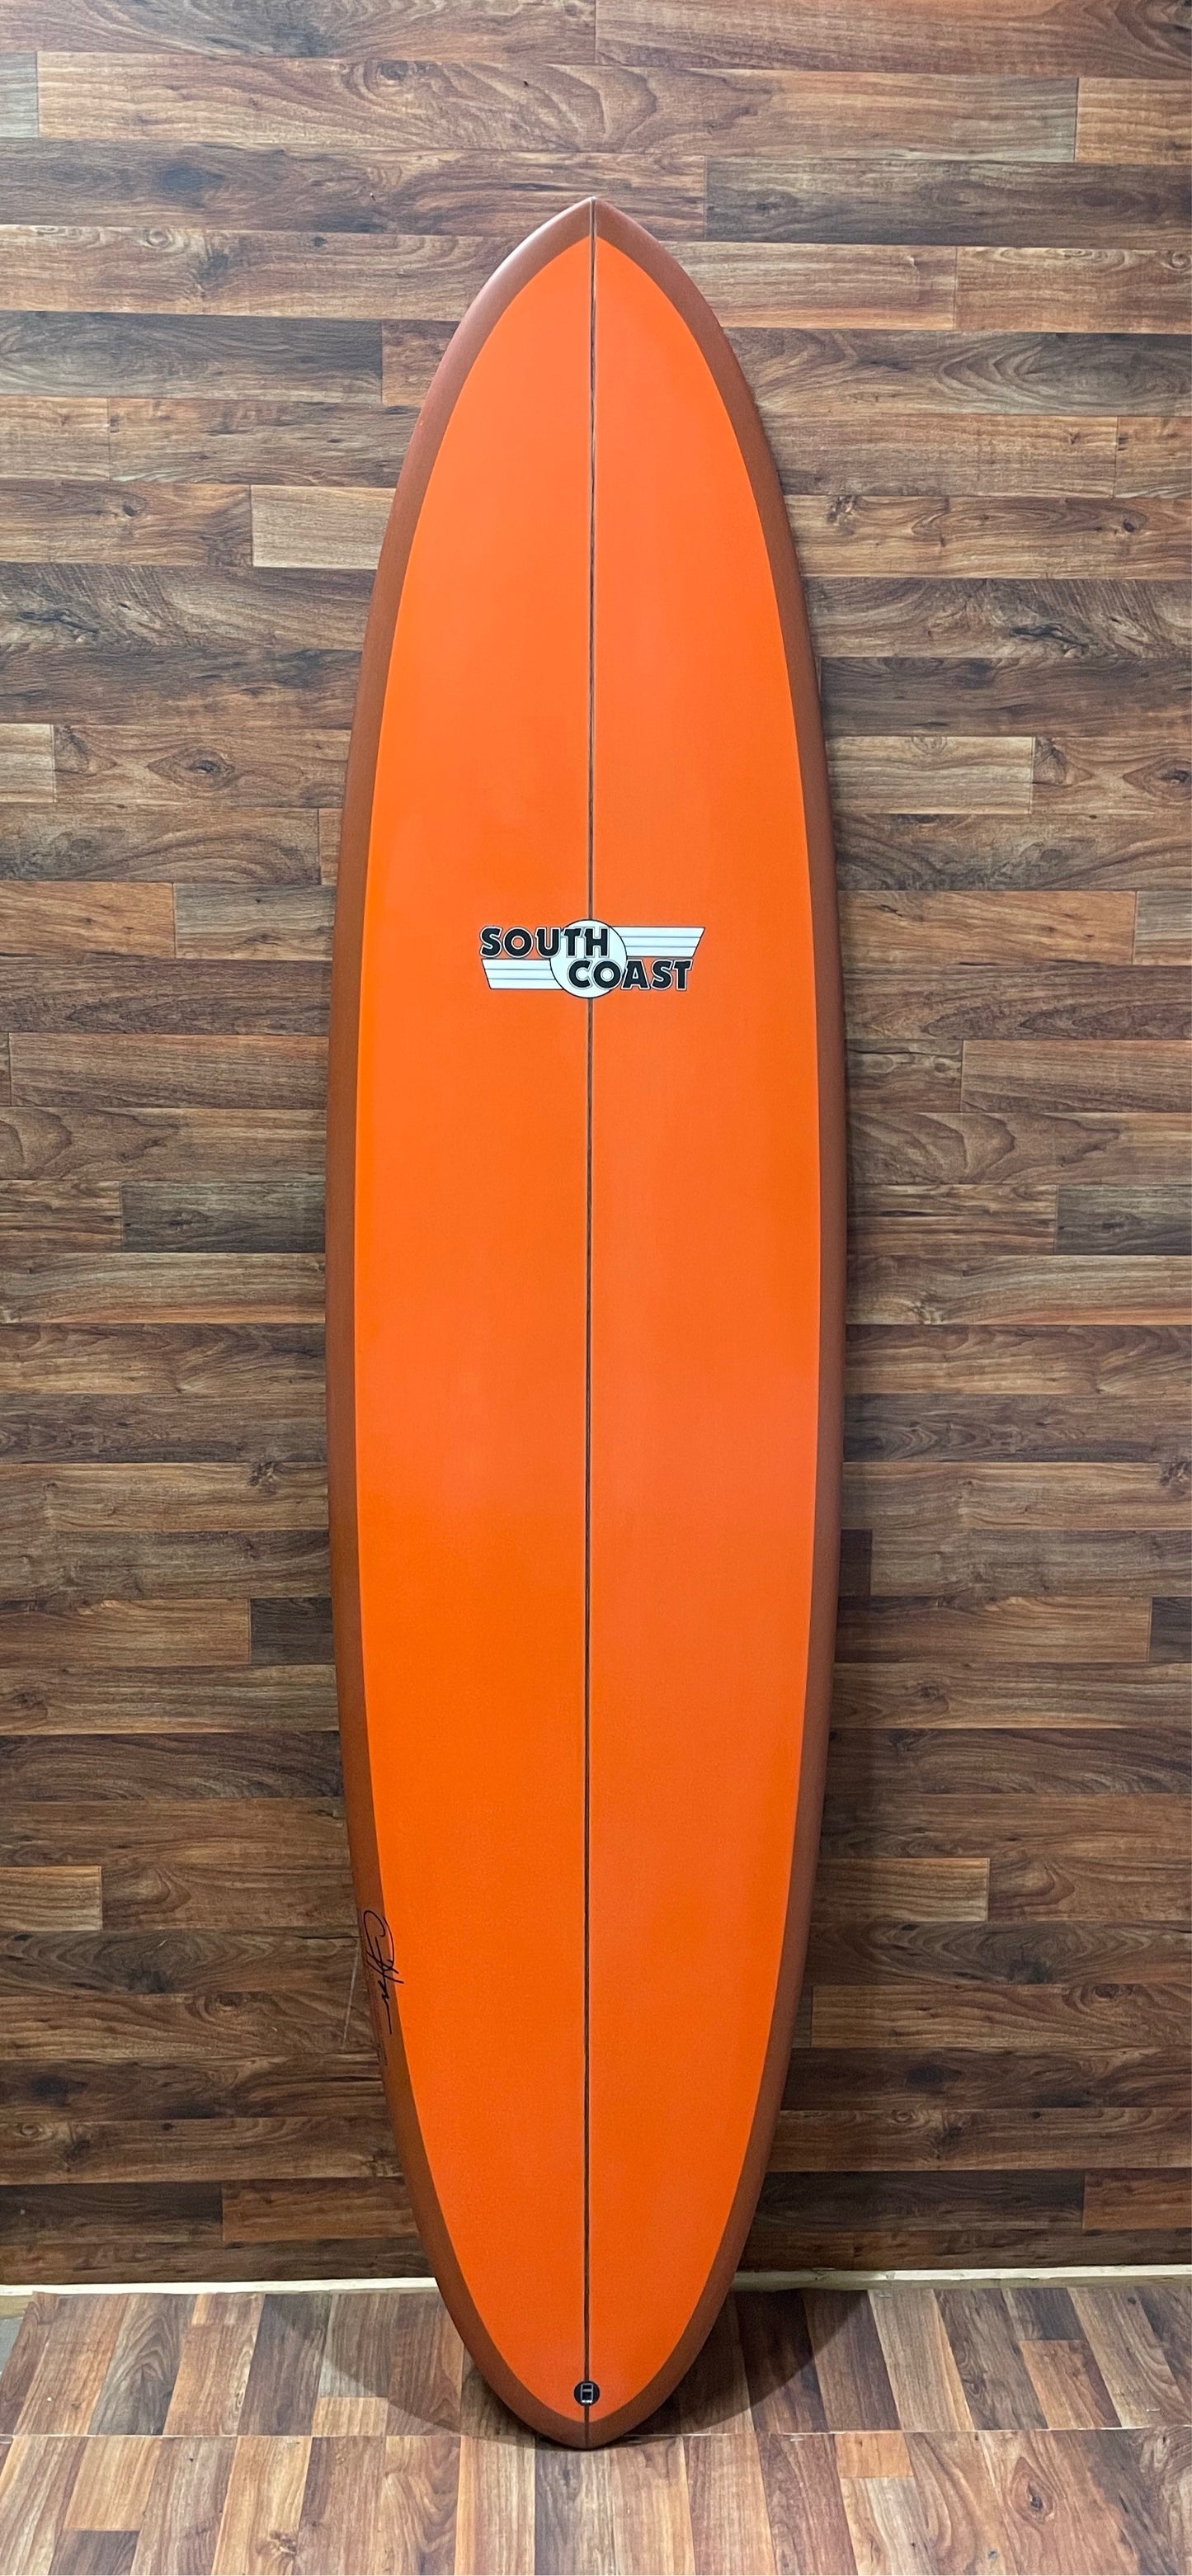 SOUTH COAST DIABLO SURFBOARD 7'4"